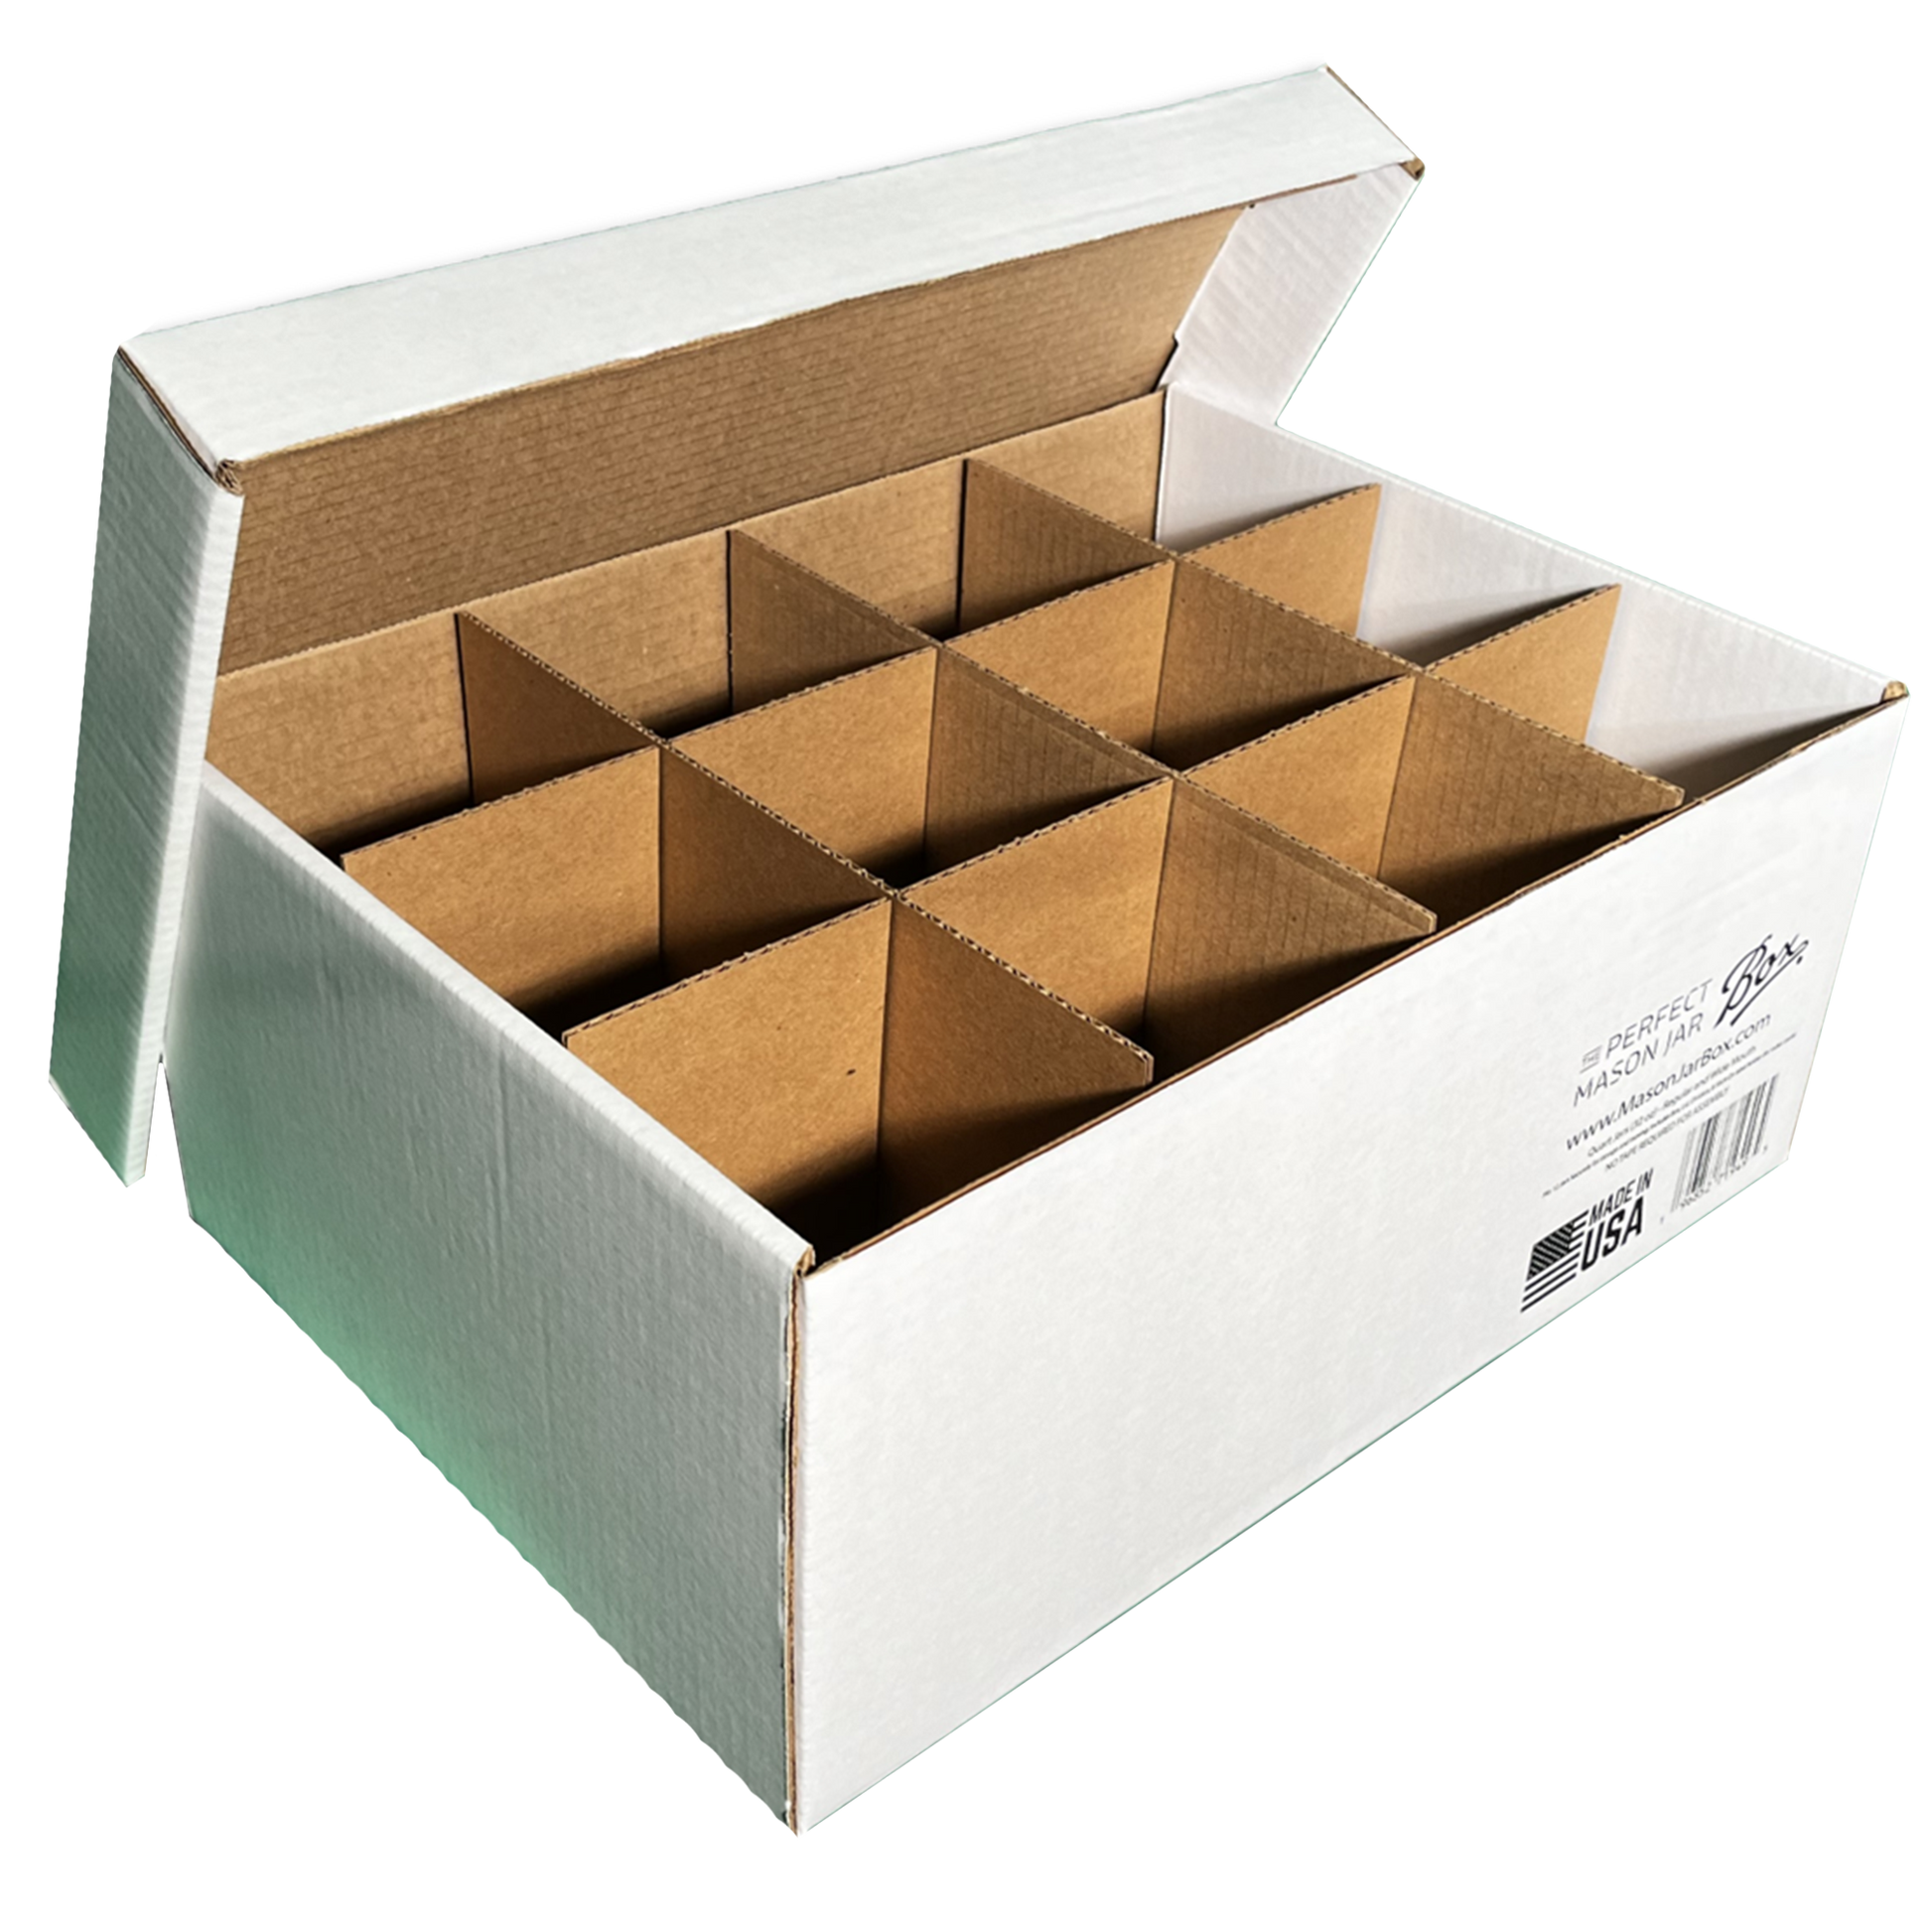 8 oz Square Mason Jar 2-Pack Shipping Box